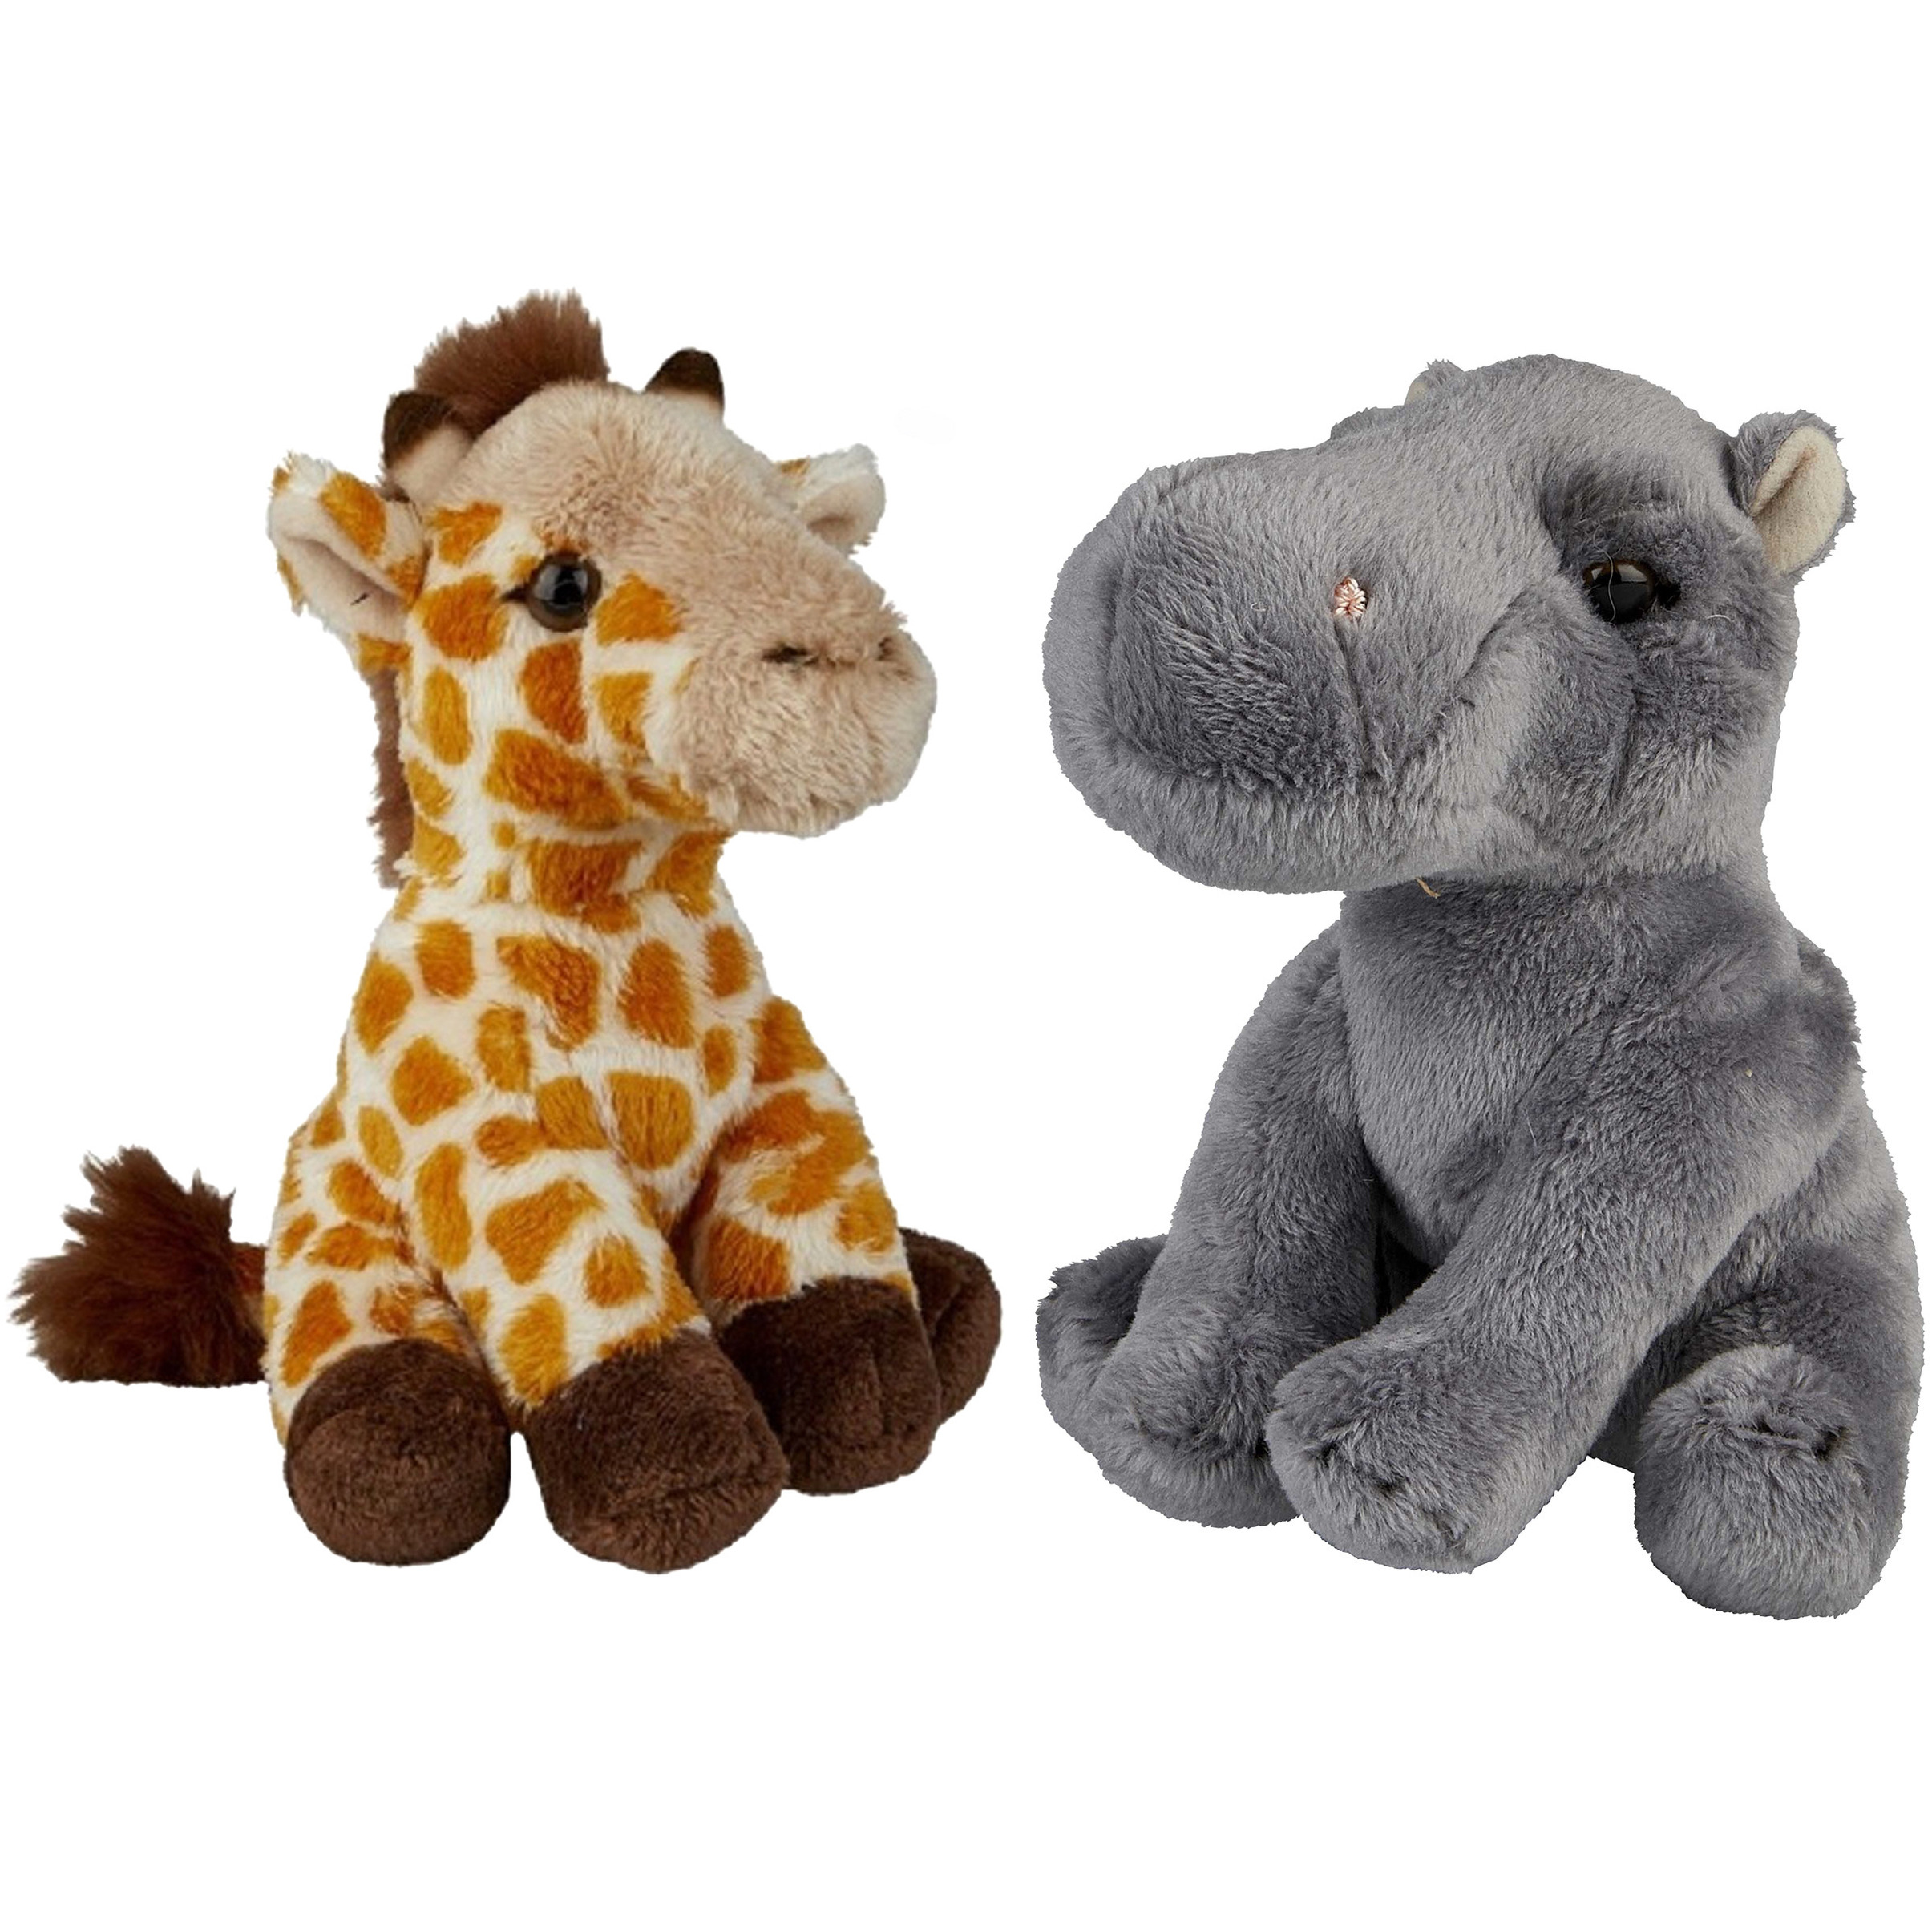 Safari dieren serie pluche knuffels 2x stuks Nijlpaard en Giraffe van 15 cm